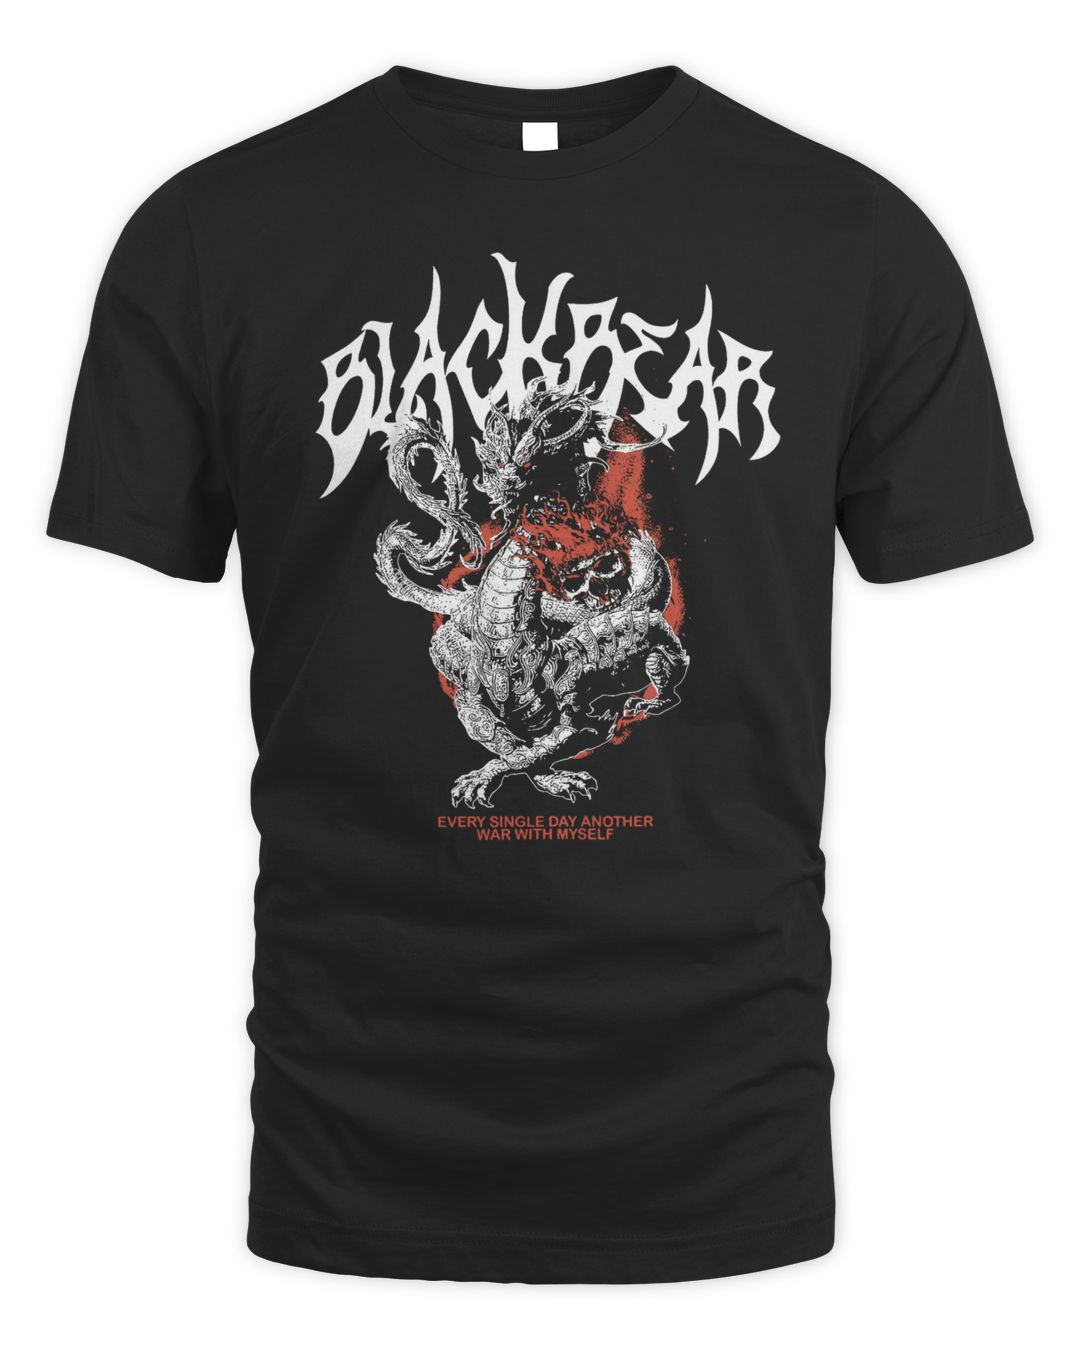 Blackbear Merch Metal Dragon Shirt t2j